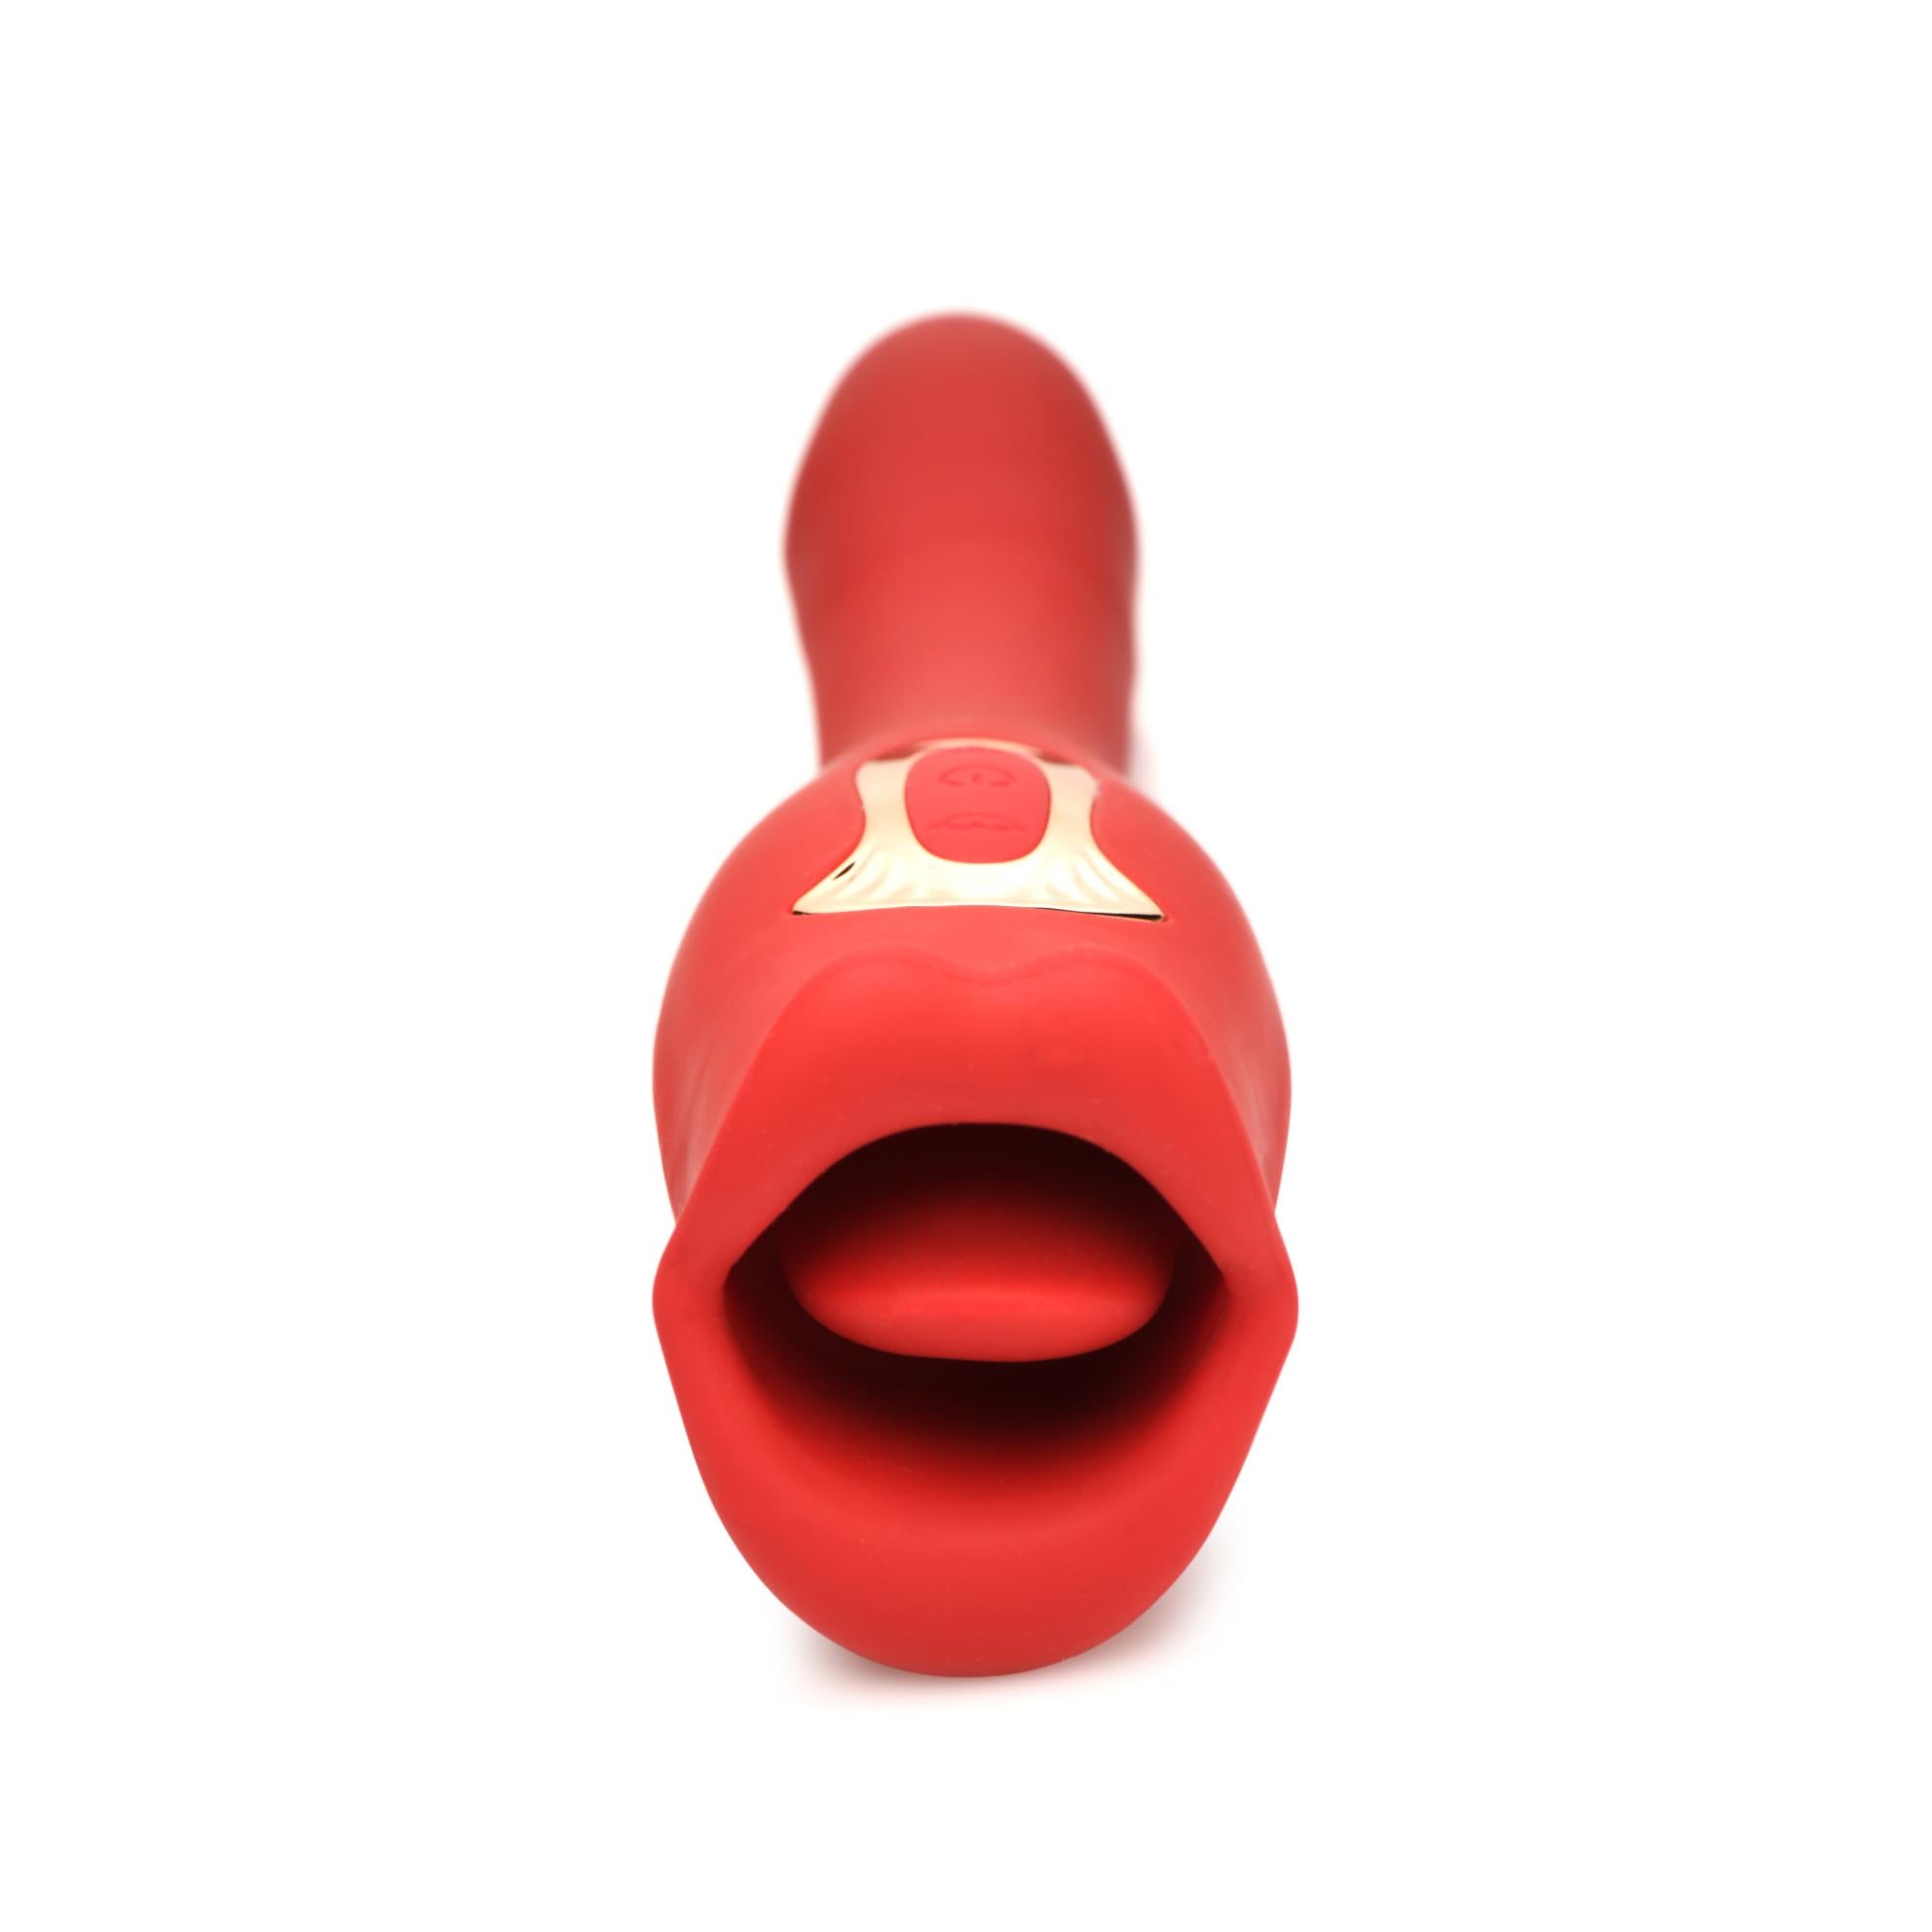 Lickgasm Lickgasm Kiss & Tell Pro Dual-Ended Kissing Vibrator